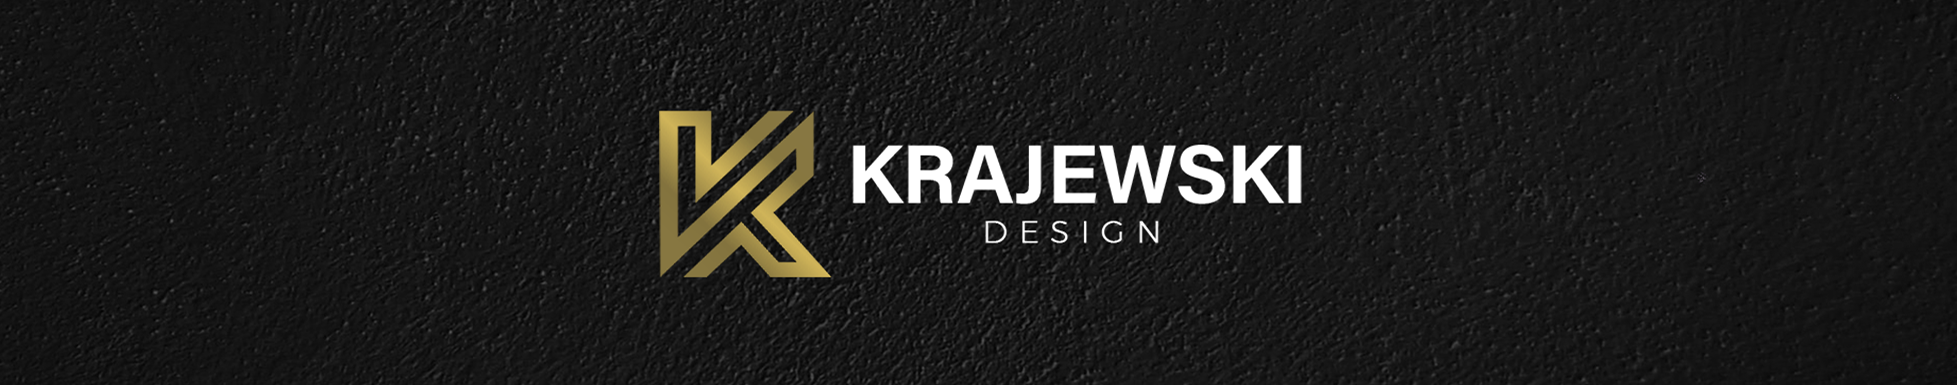 Krajewski Design's profile banner